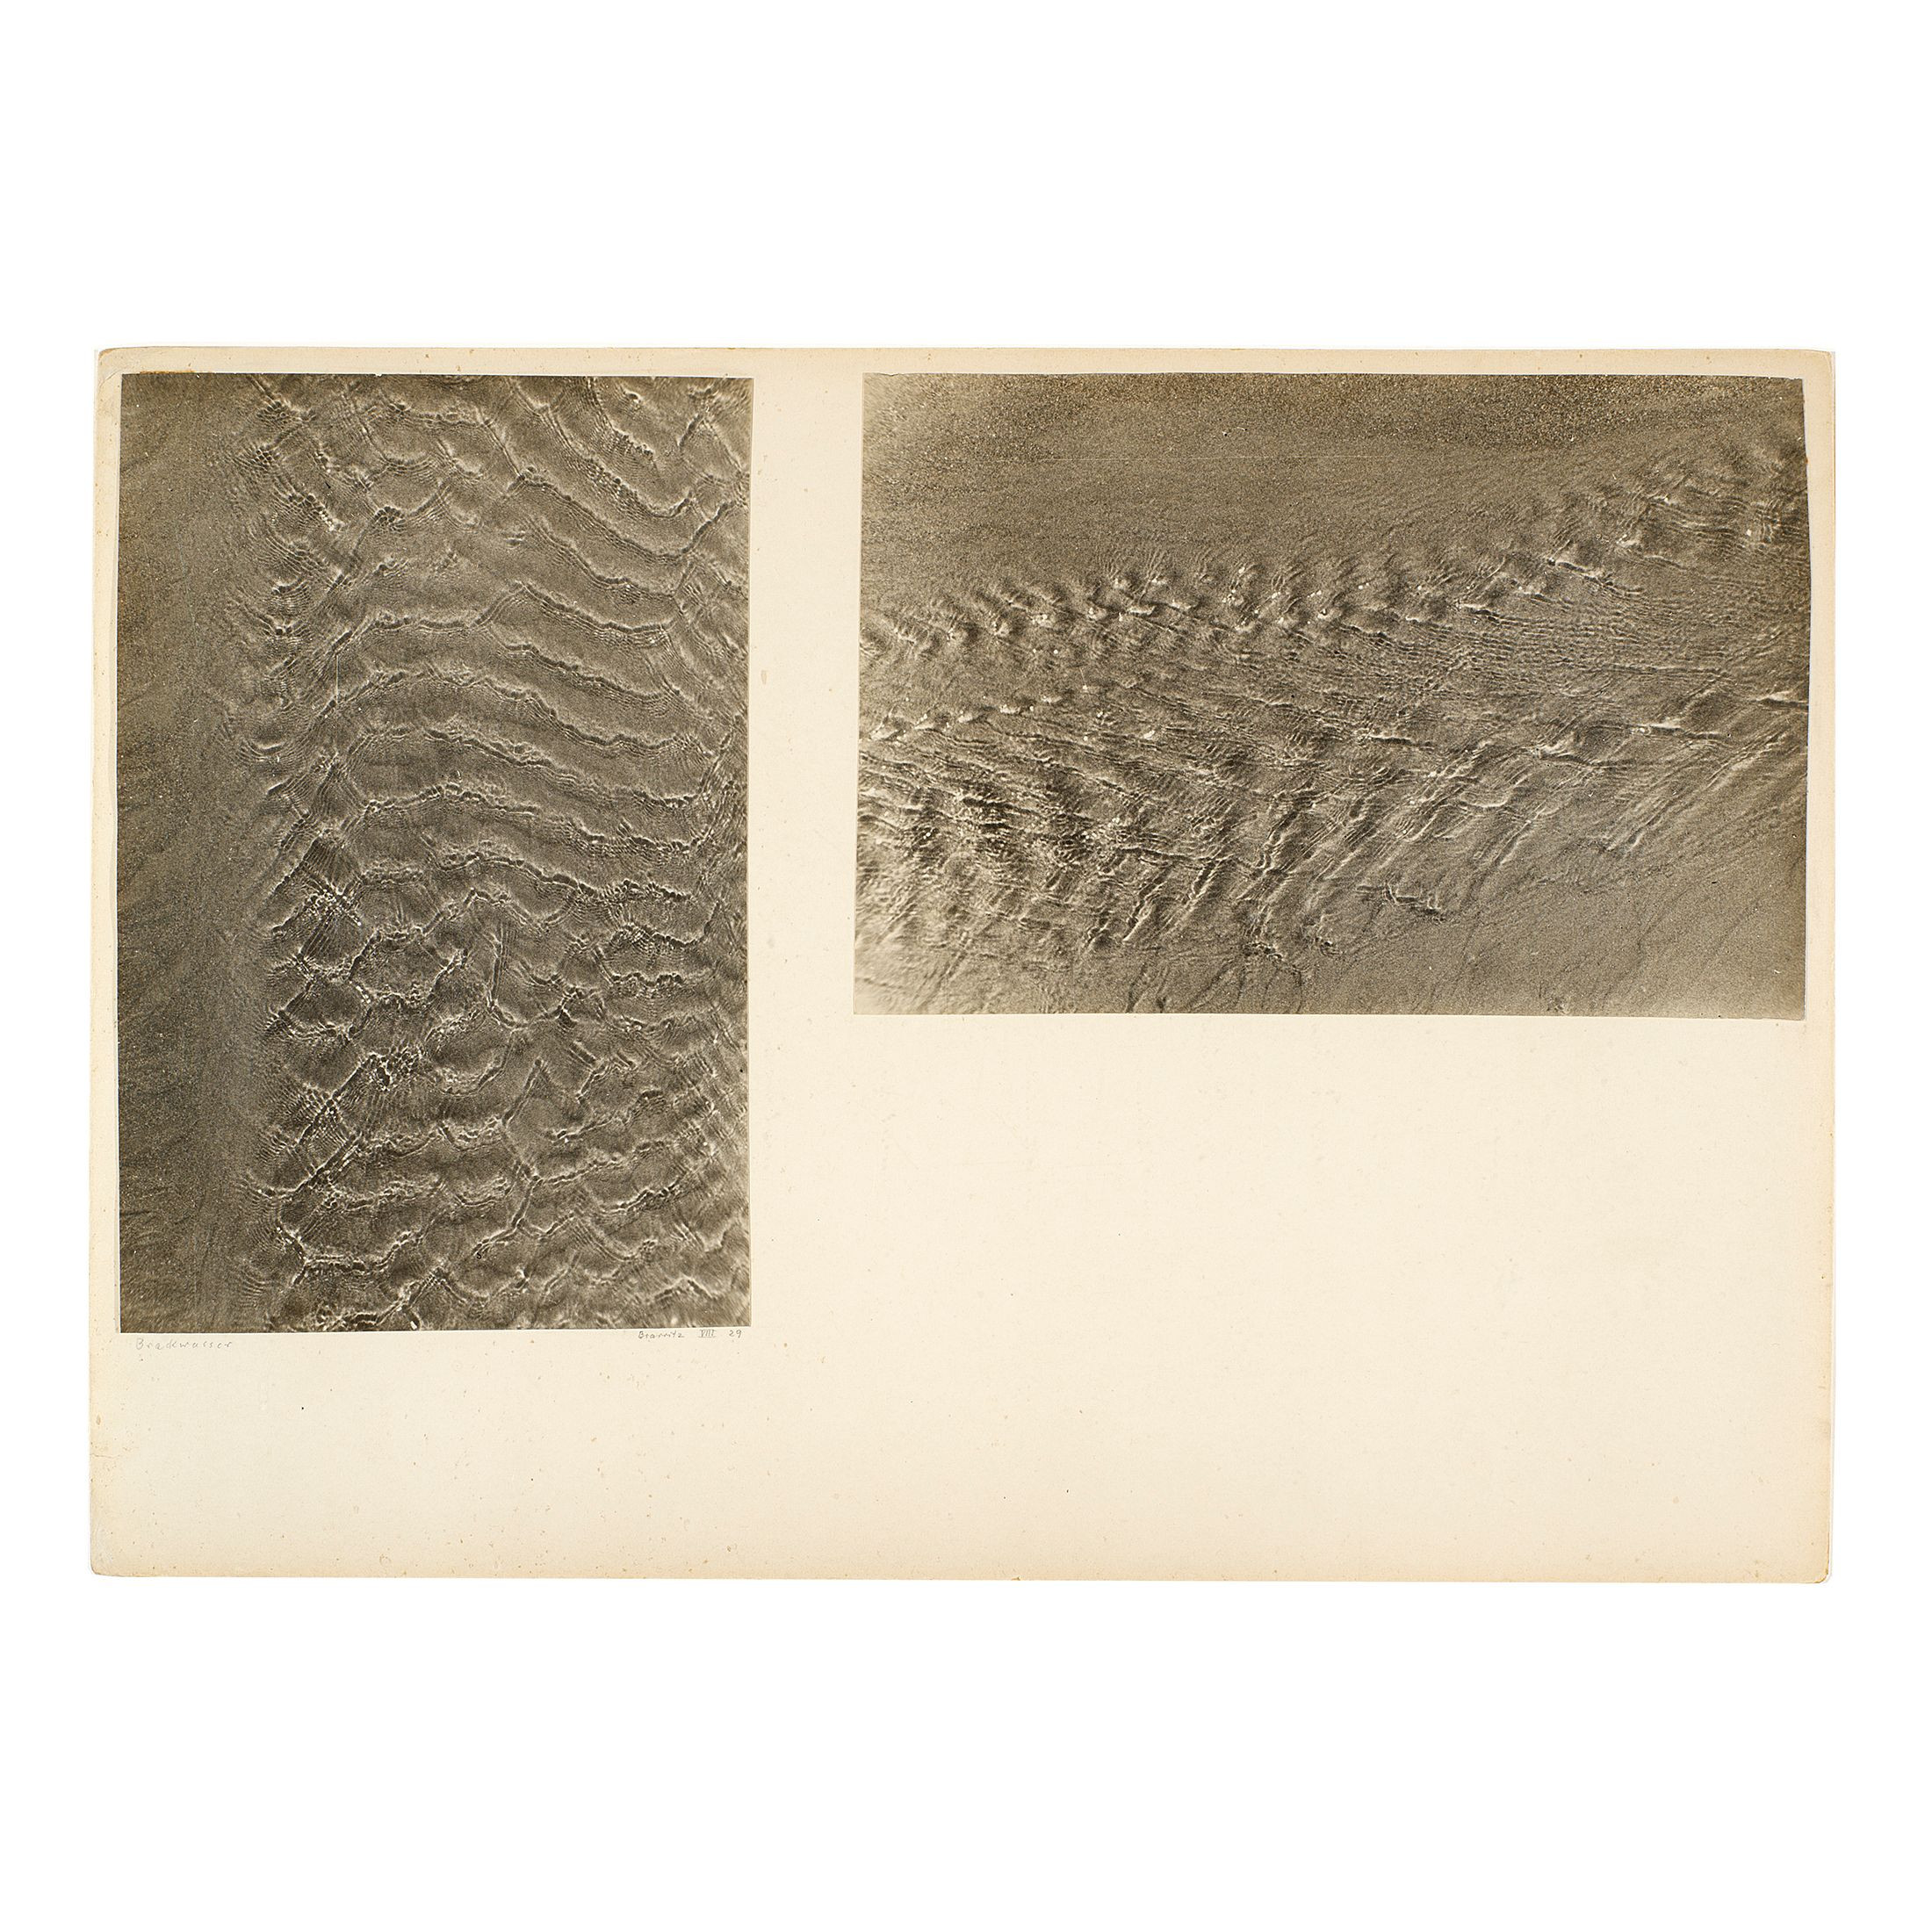 Josef Albers, Brackwasser Biarritz VIII ’29, 1929. Gelatin silver prints mounted on cardboard. © 2020 The Josef and Anni Albers Foundation/ARS, NY/DACS